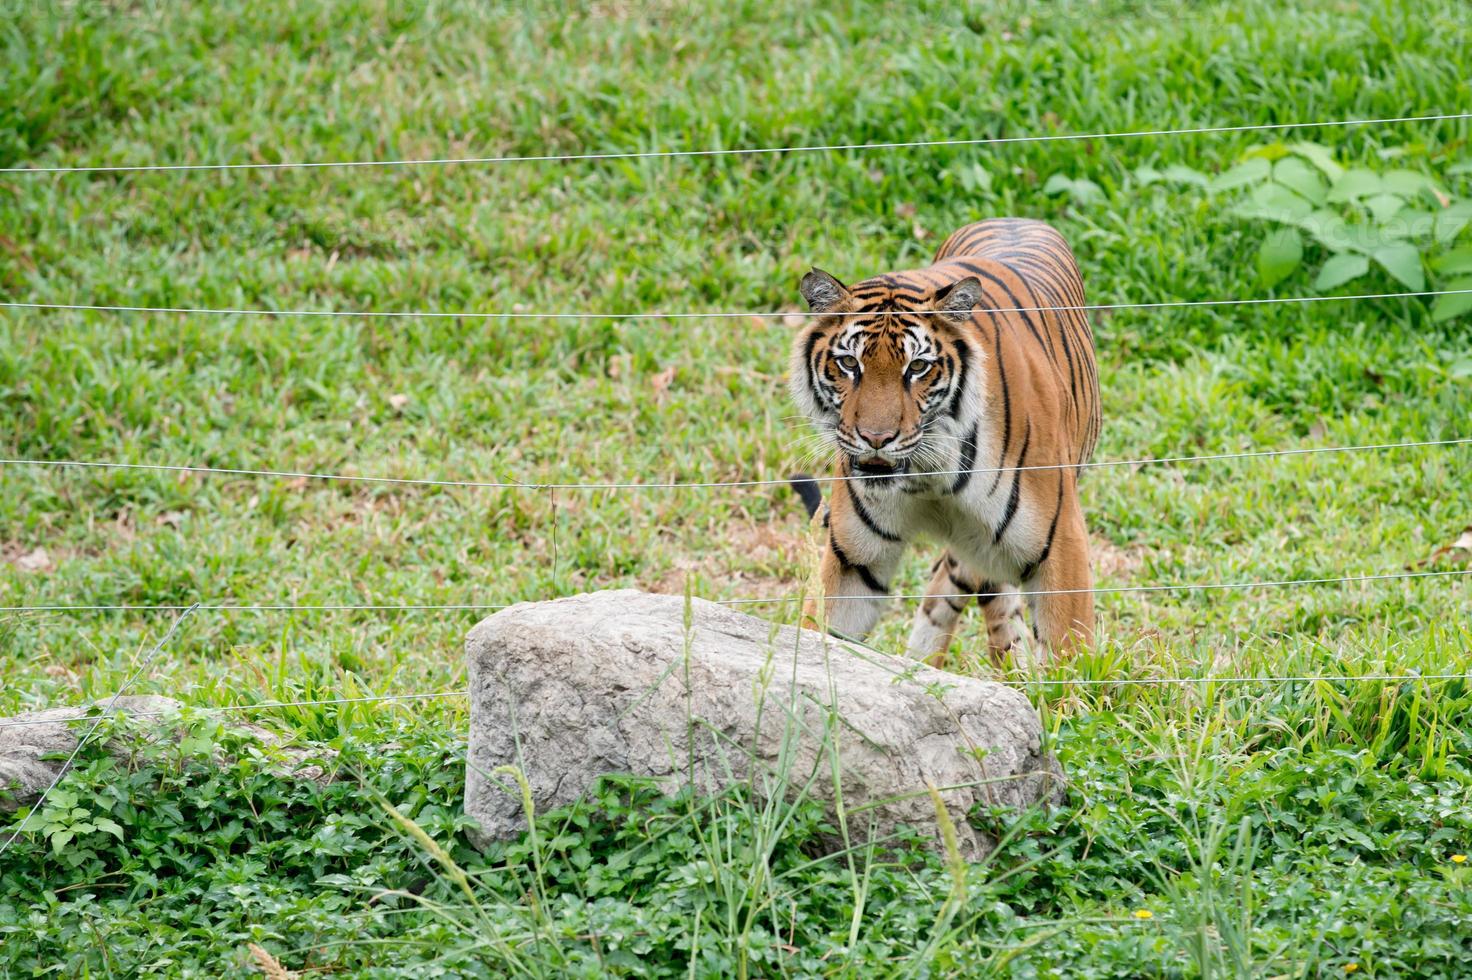 tigre de bengala caminando cerca de un cable eléctrico foto